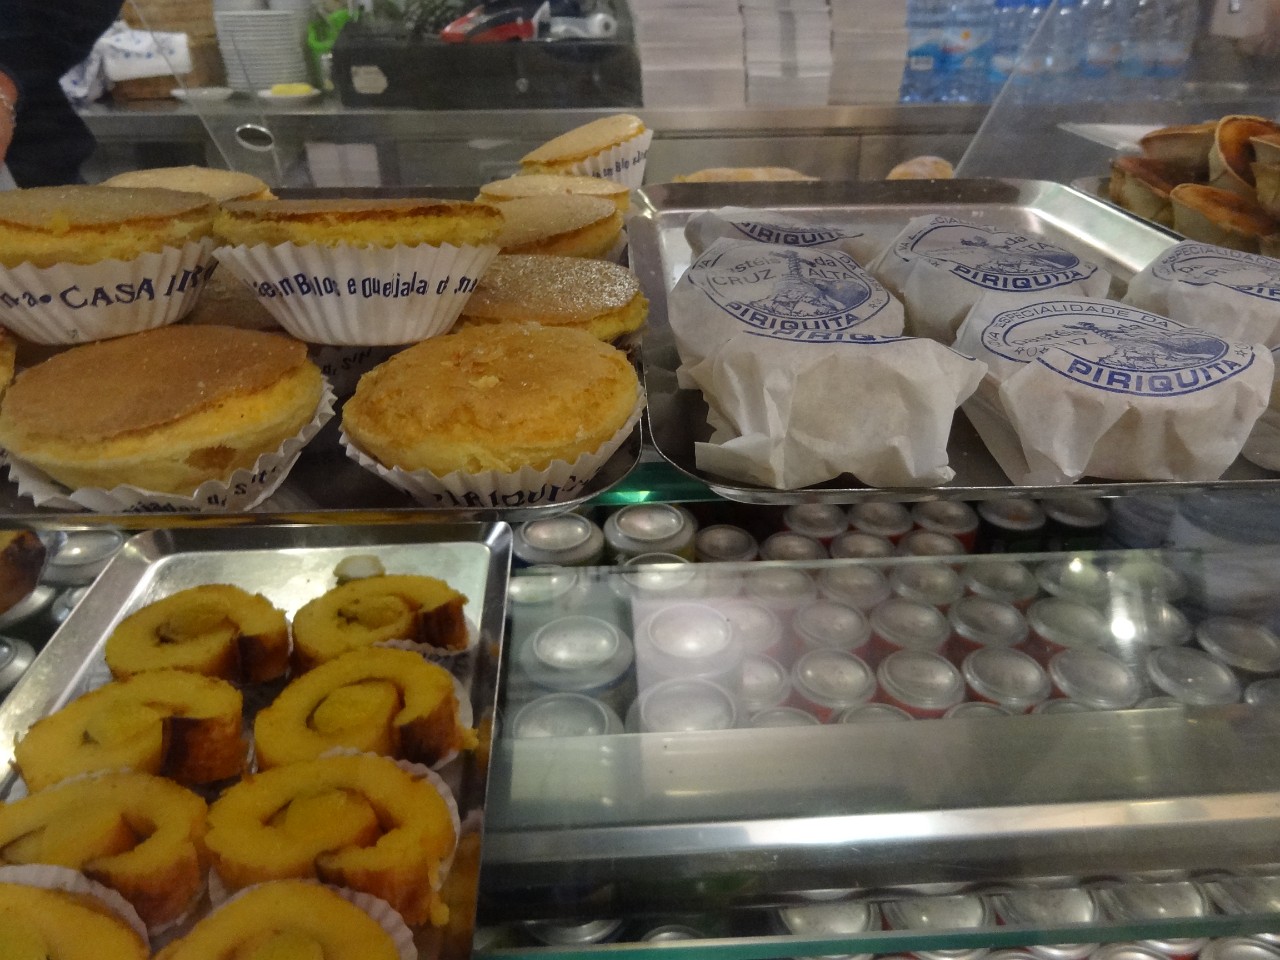 Sintra pastries